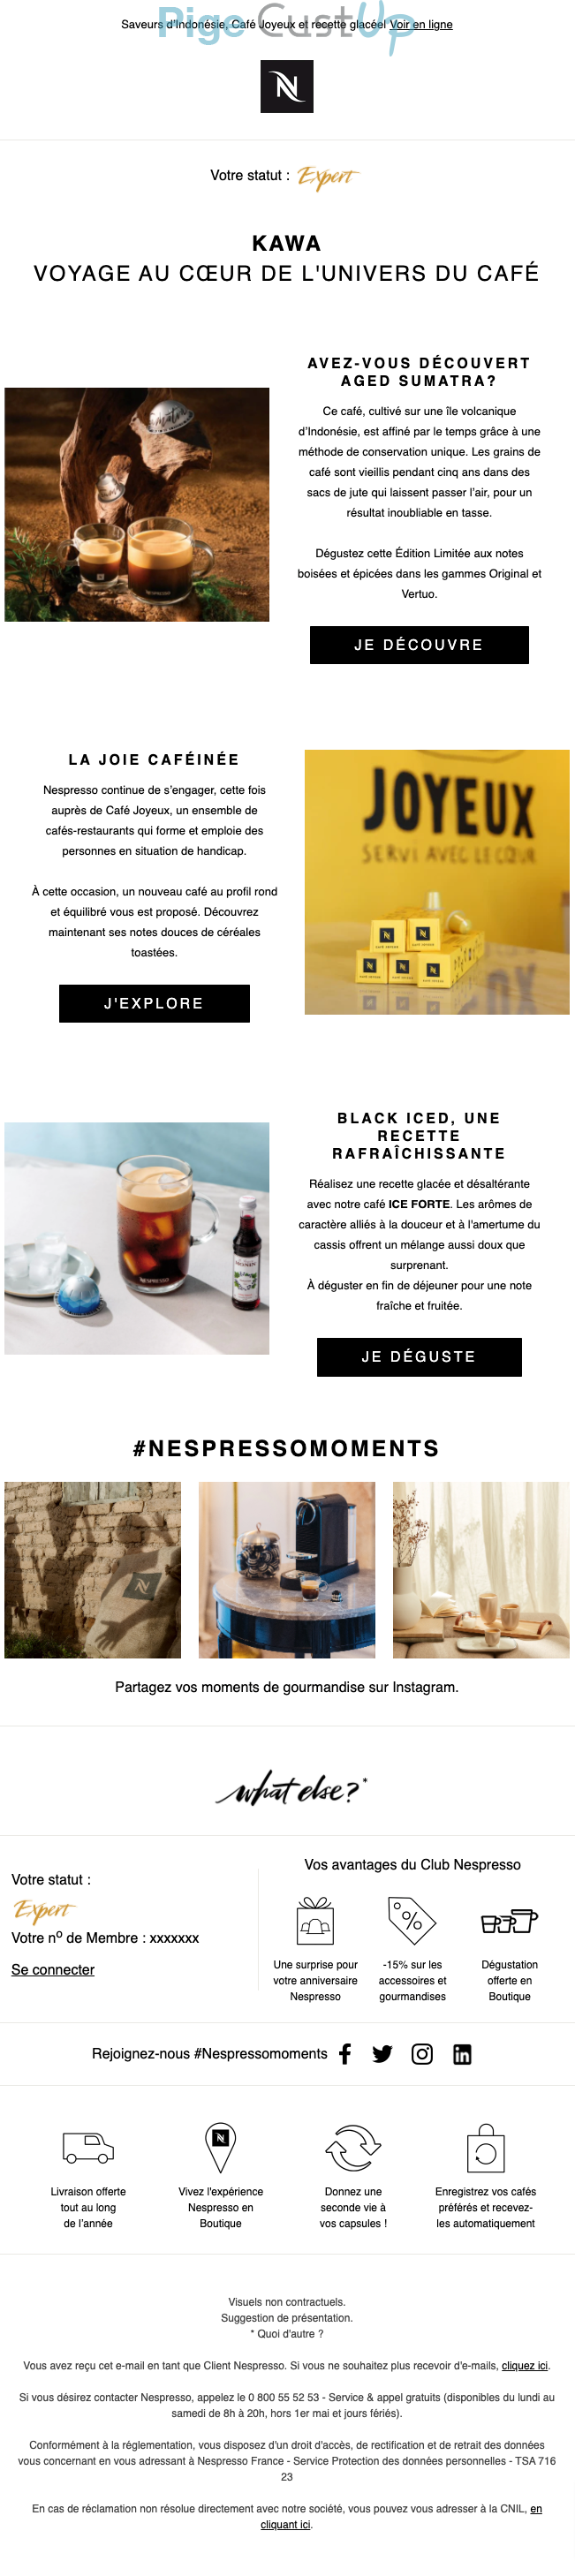 Exemple de Type de media  e-mailing - Nespresso - Marketing relationnel - Newsletter